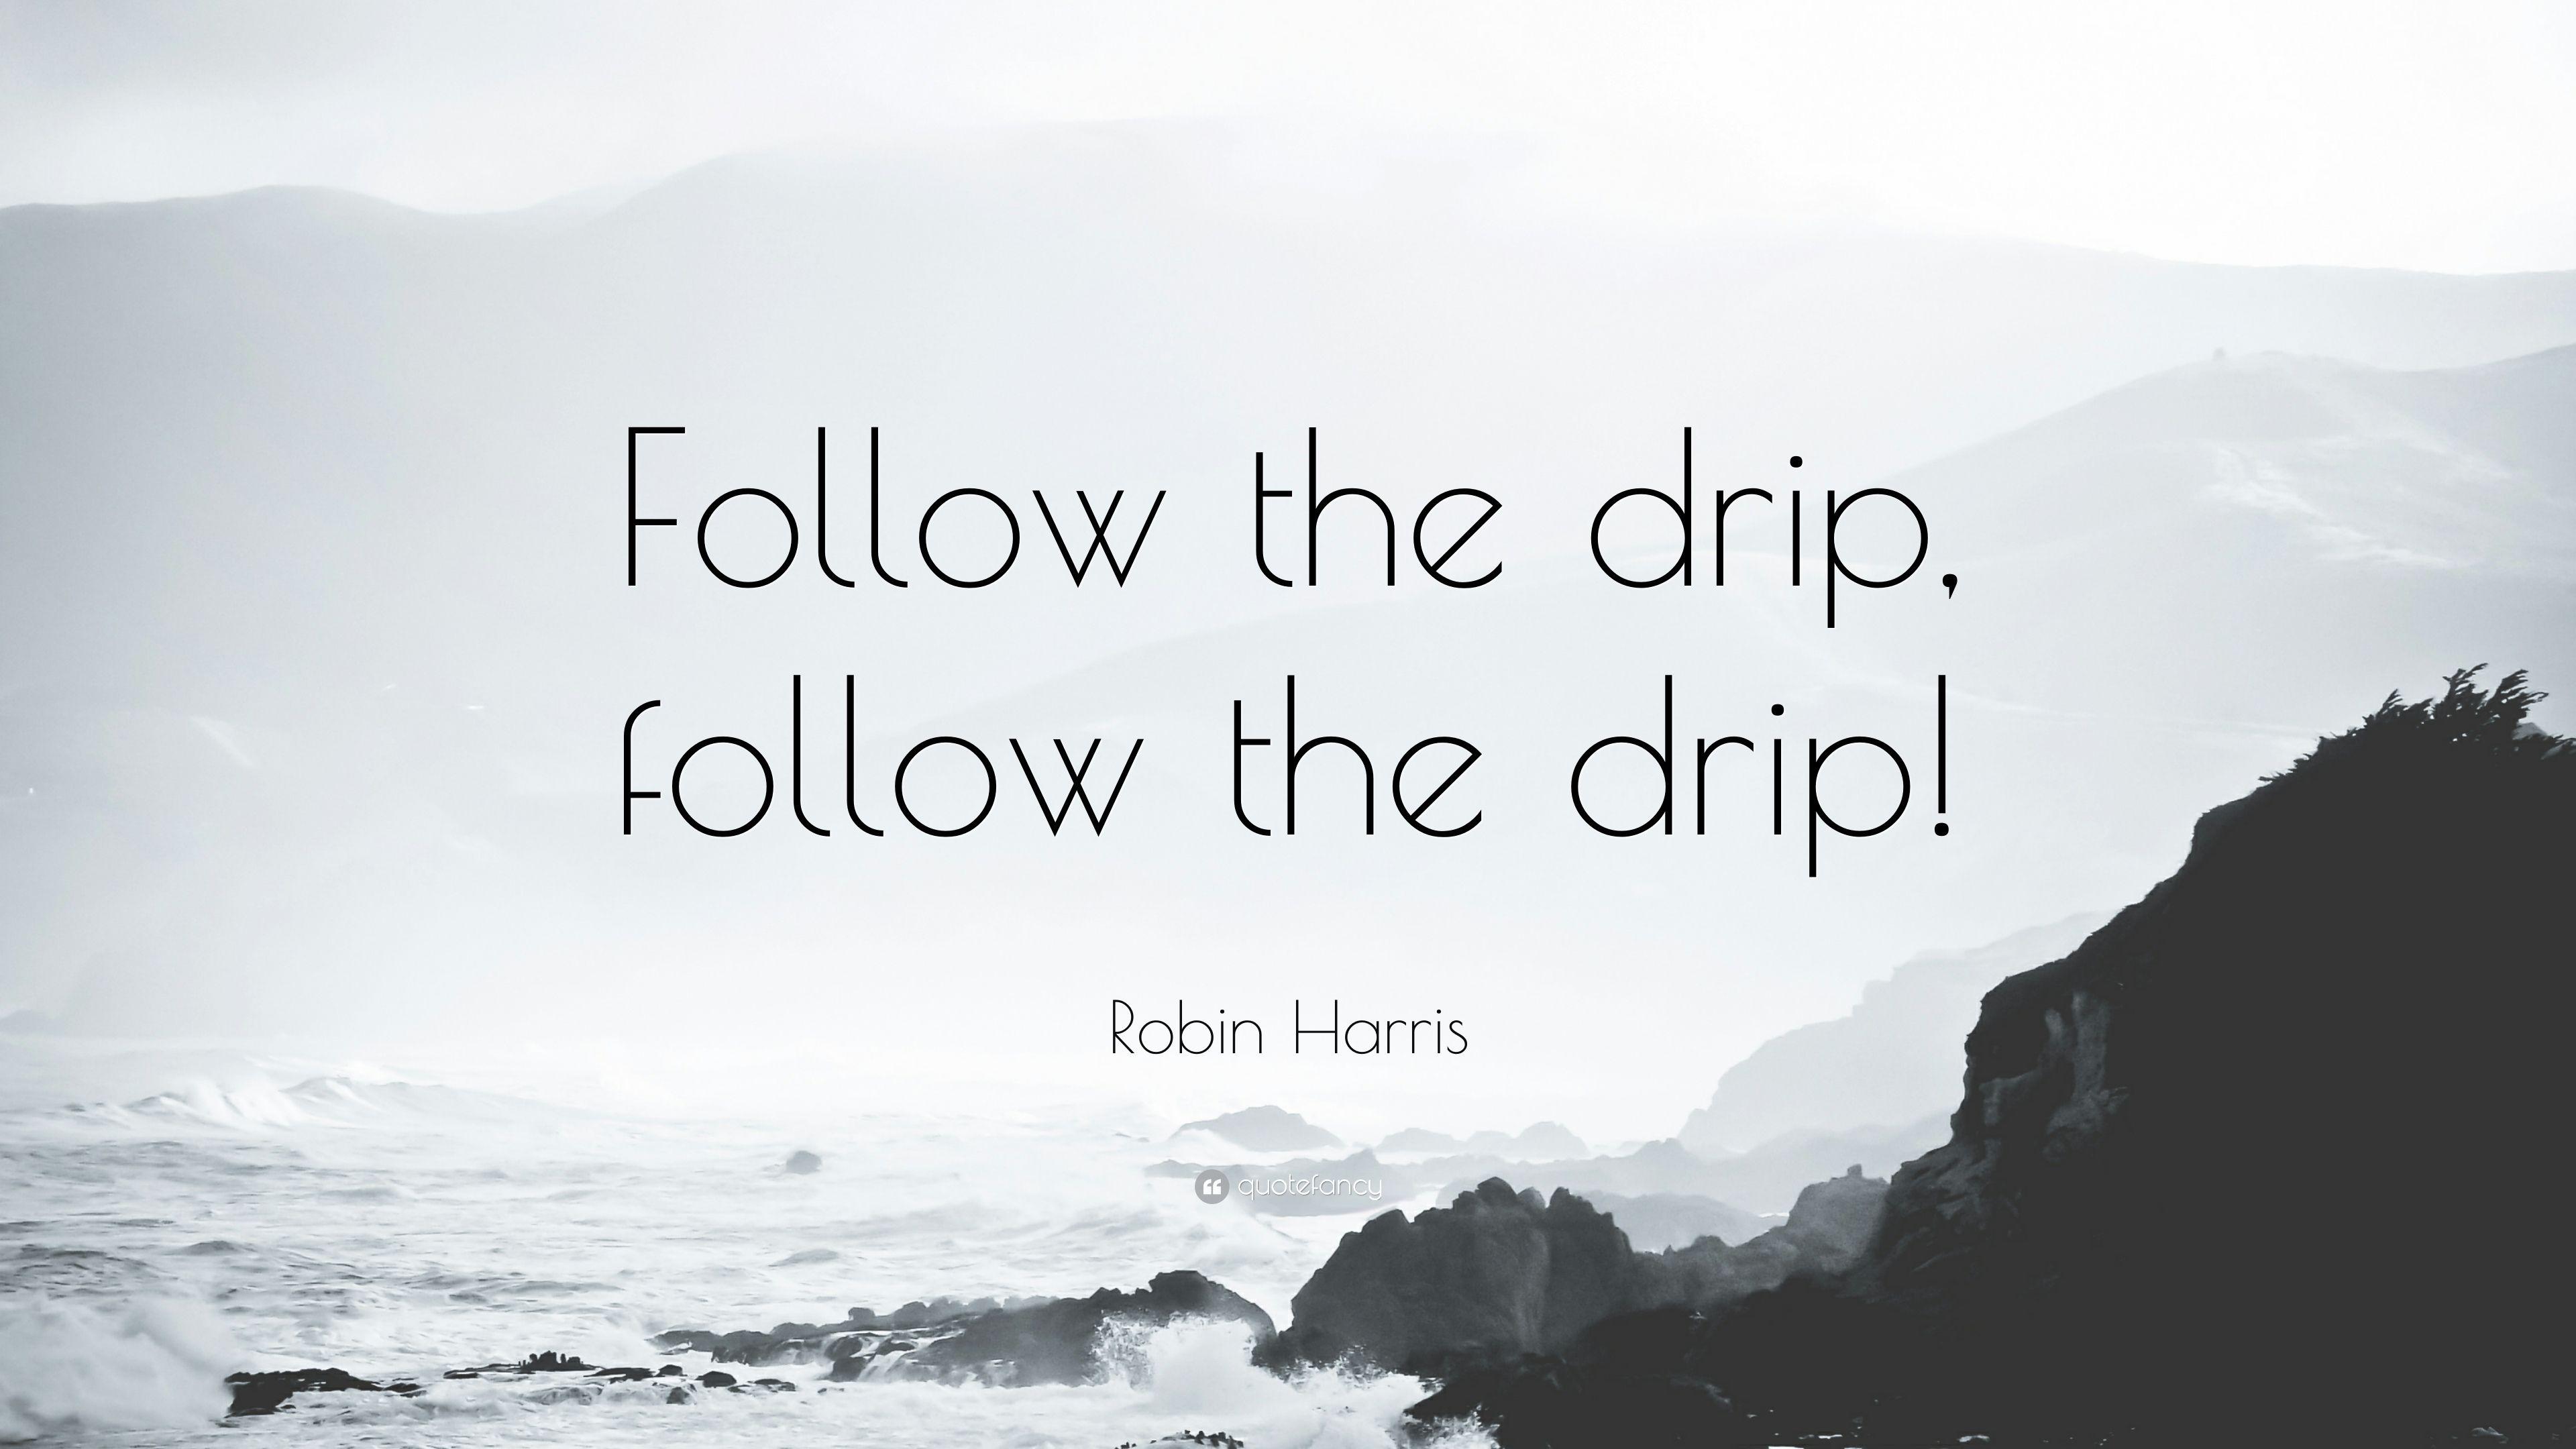 Robin Harris Quote: “Follow the drip, follow the drip!” 7